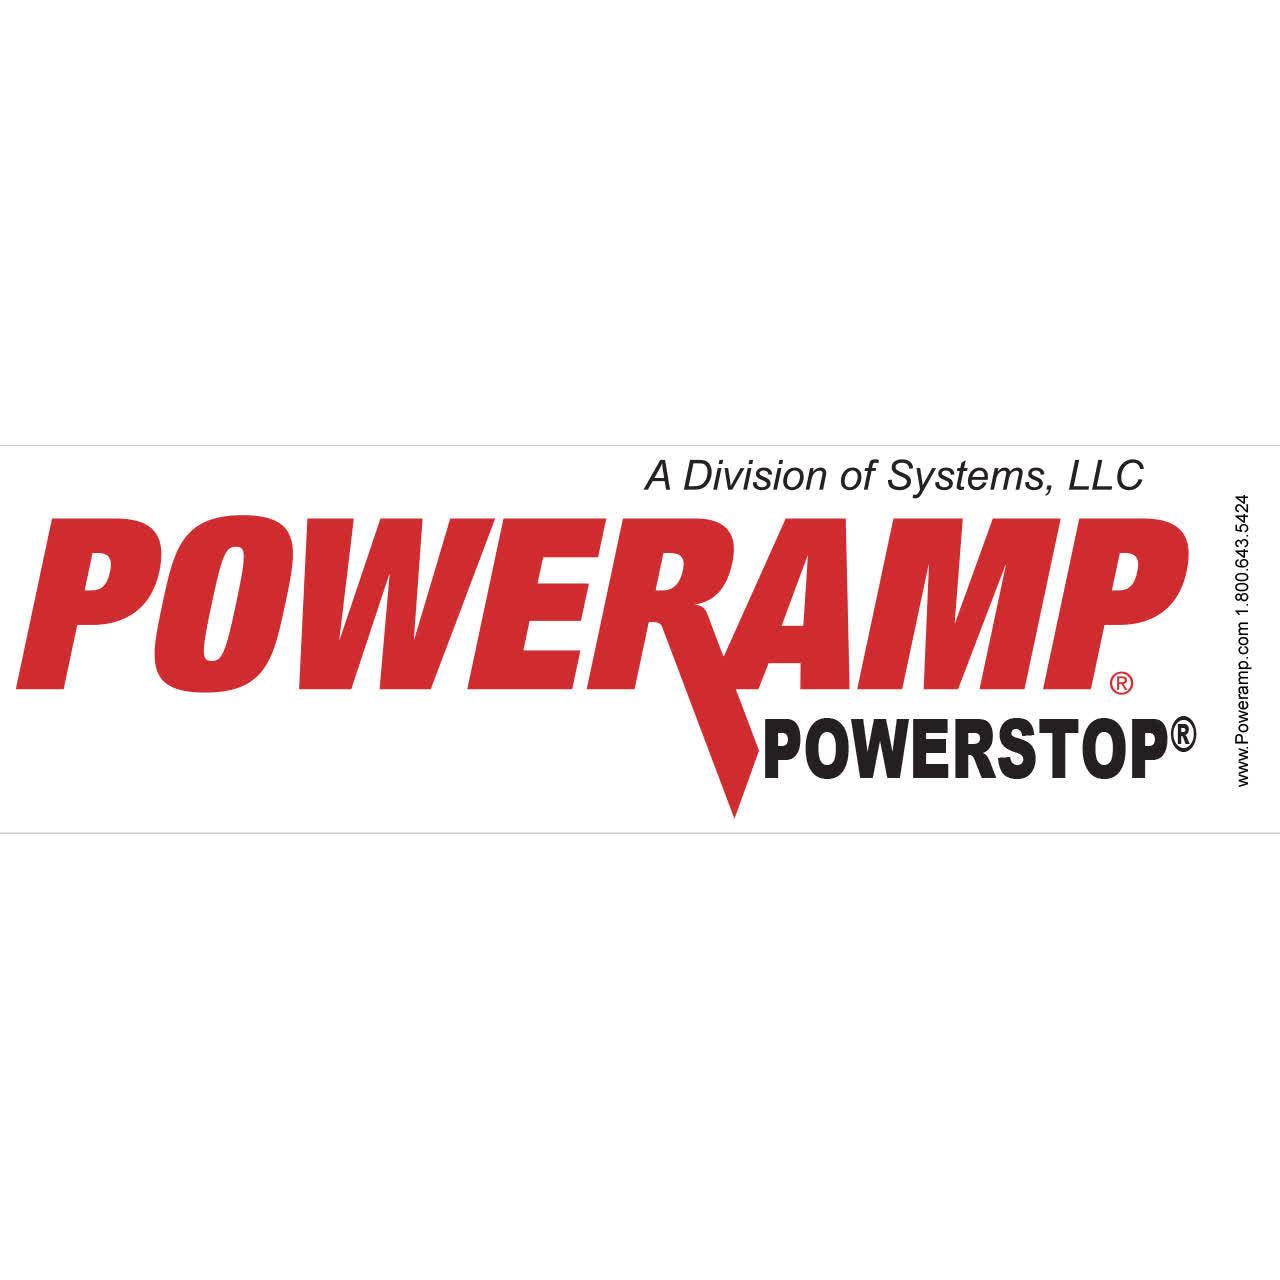 1751-0444 Poweramp Powerstop Decal - Poweramp